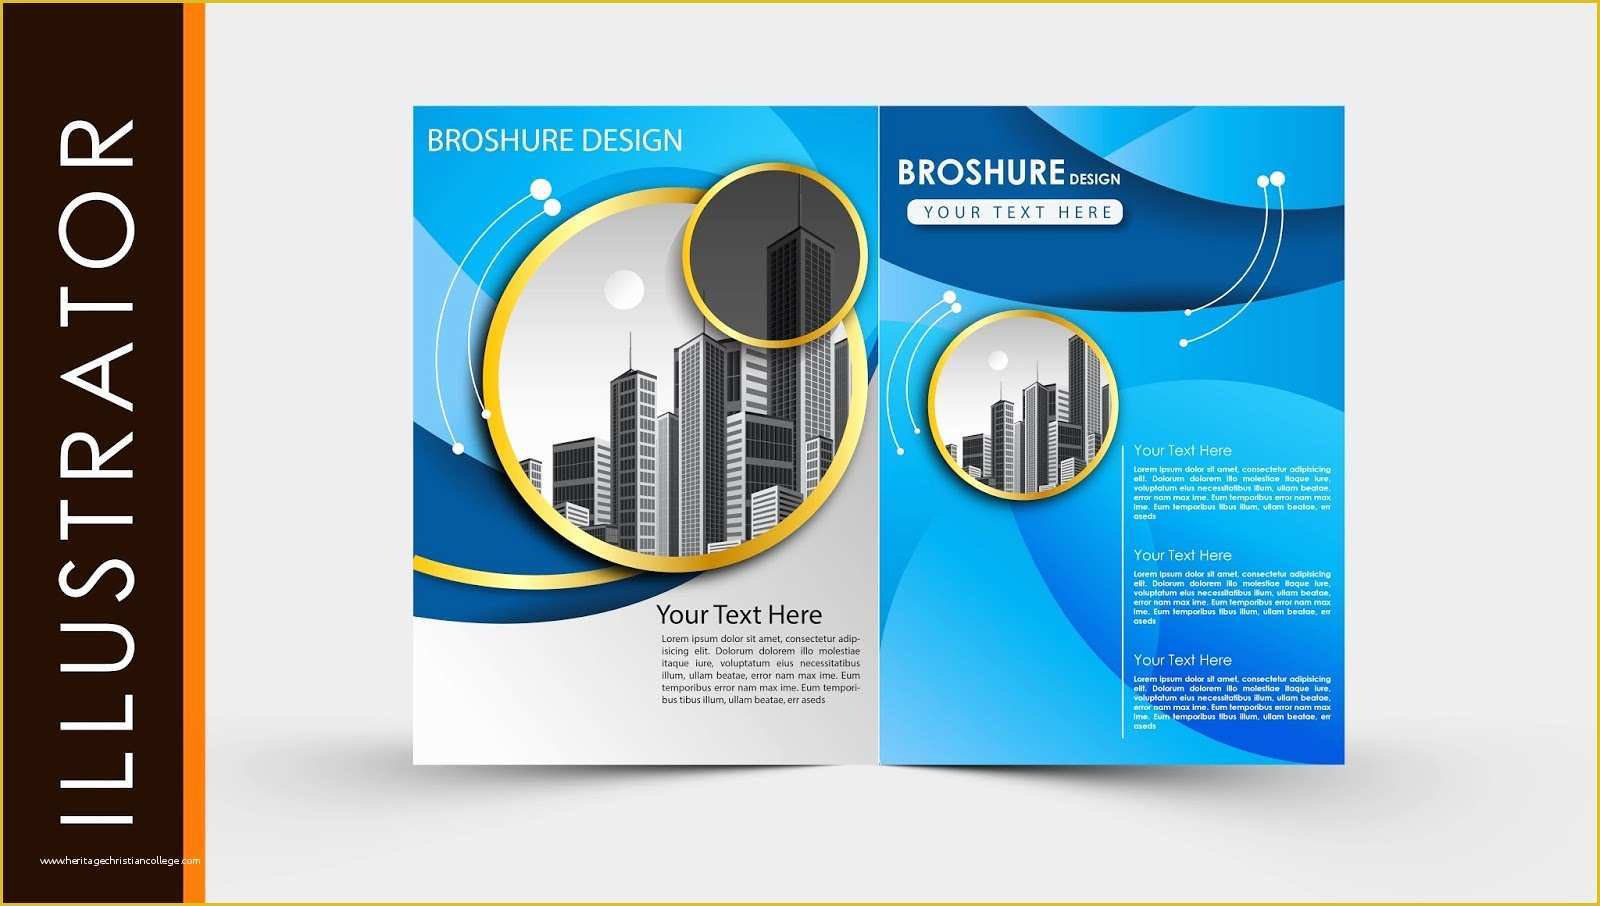 Free Adobe Illustrator Templates Of Free Download Adobe Illustrator Template Brochure Two Fold